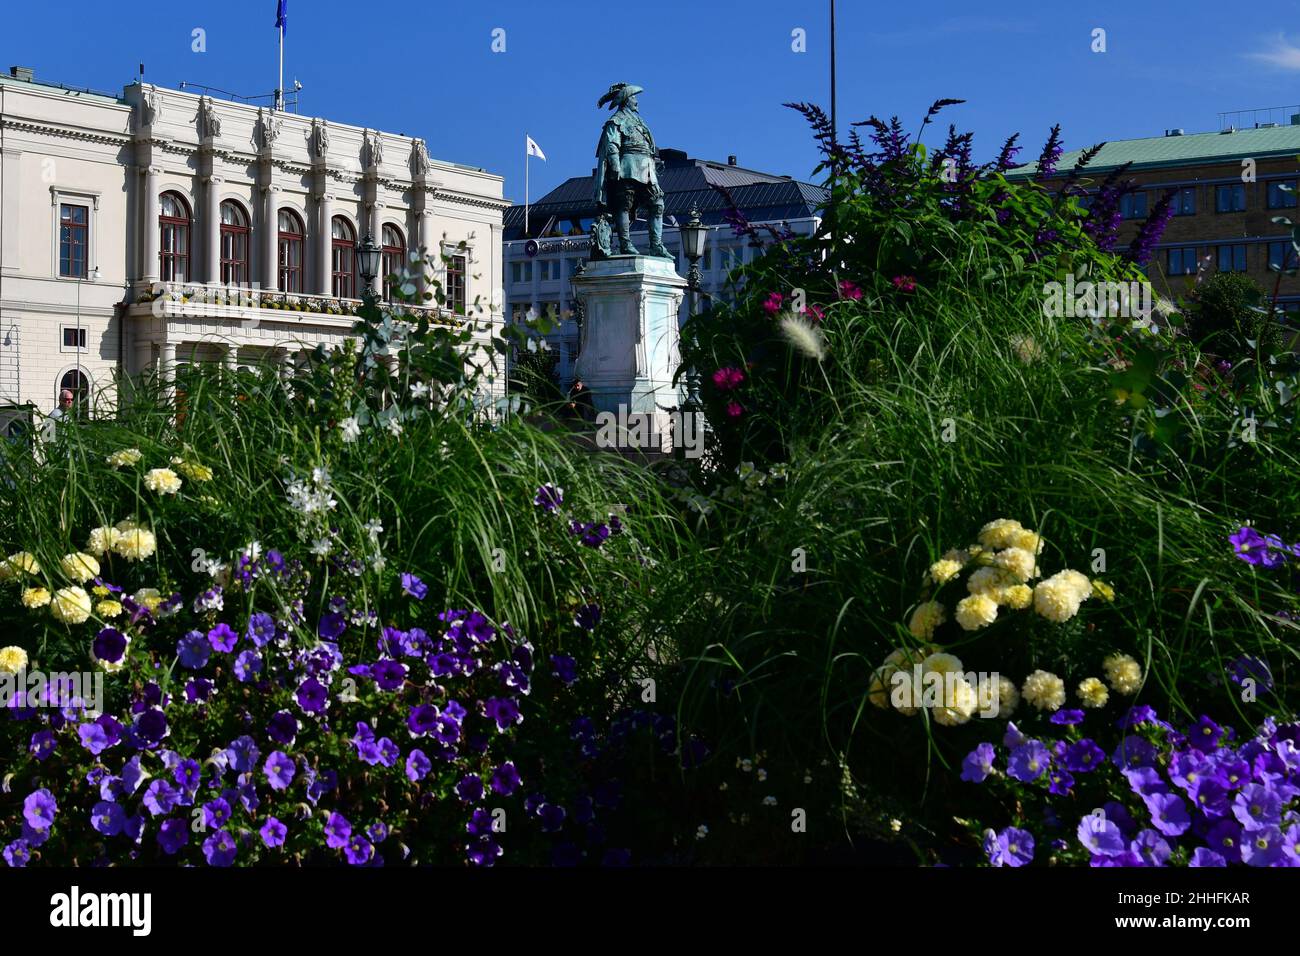 Statue of King Gustav Adolf in a flower filled square, Gothenburg, Sweden, September, 2021 Stock Photo